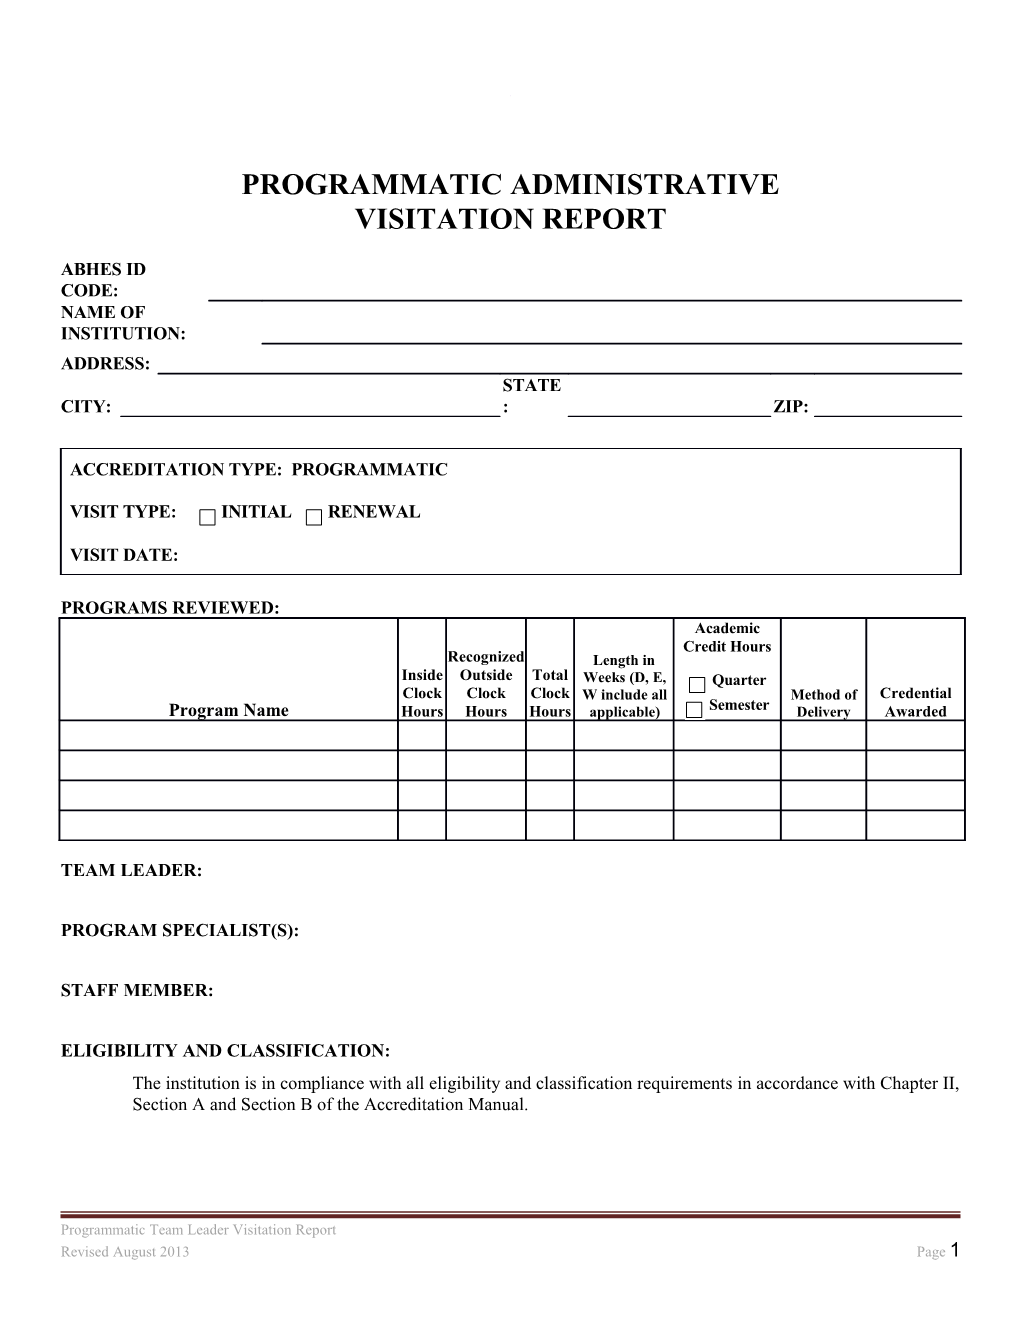 Programmatic Administrative